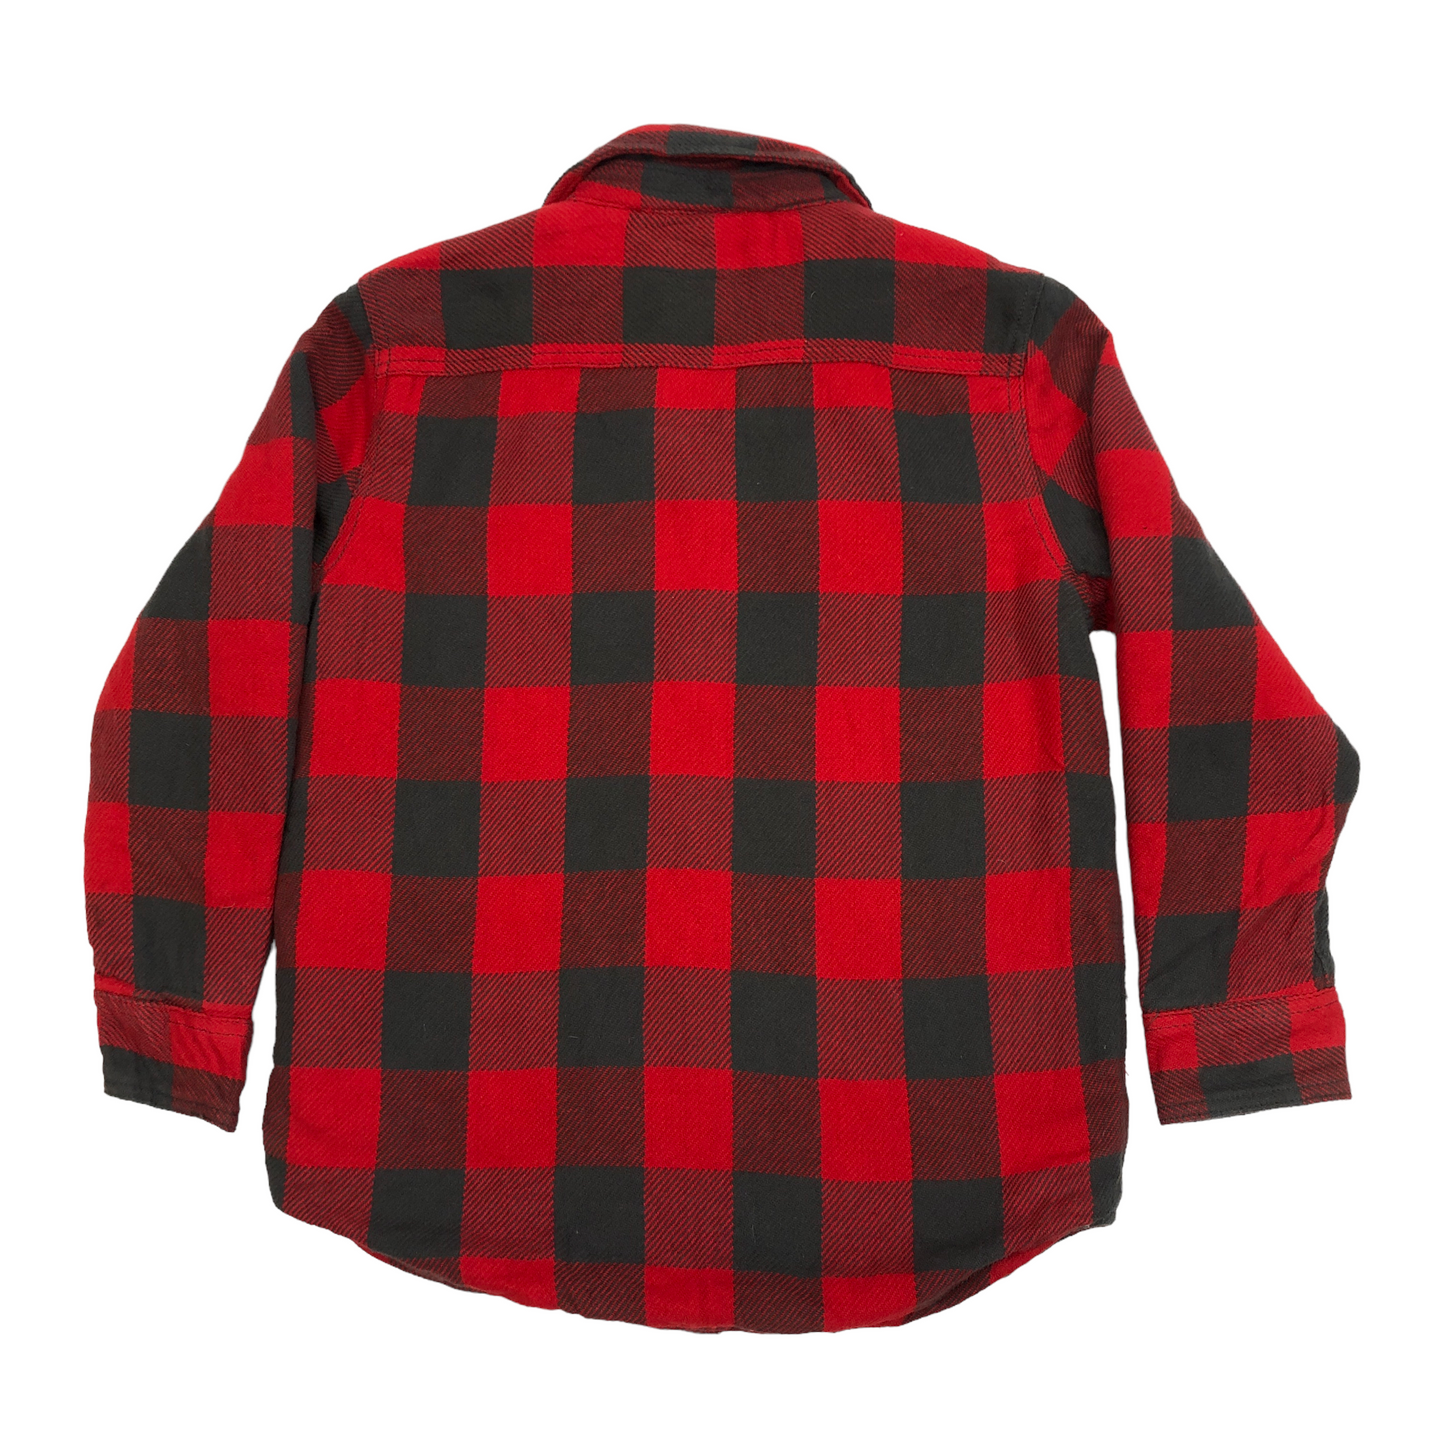 Vintage Gap Flannel Shirt Jacket (10-12yrs)